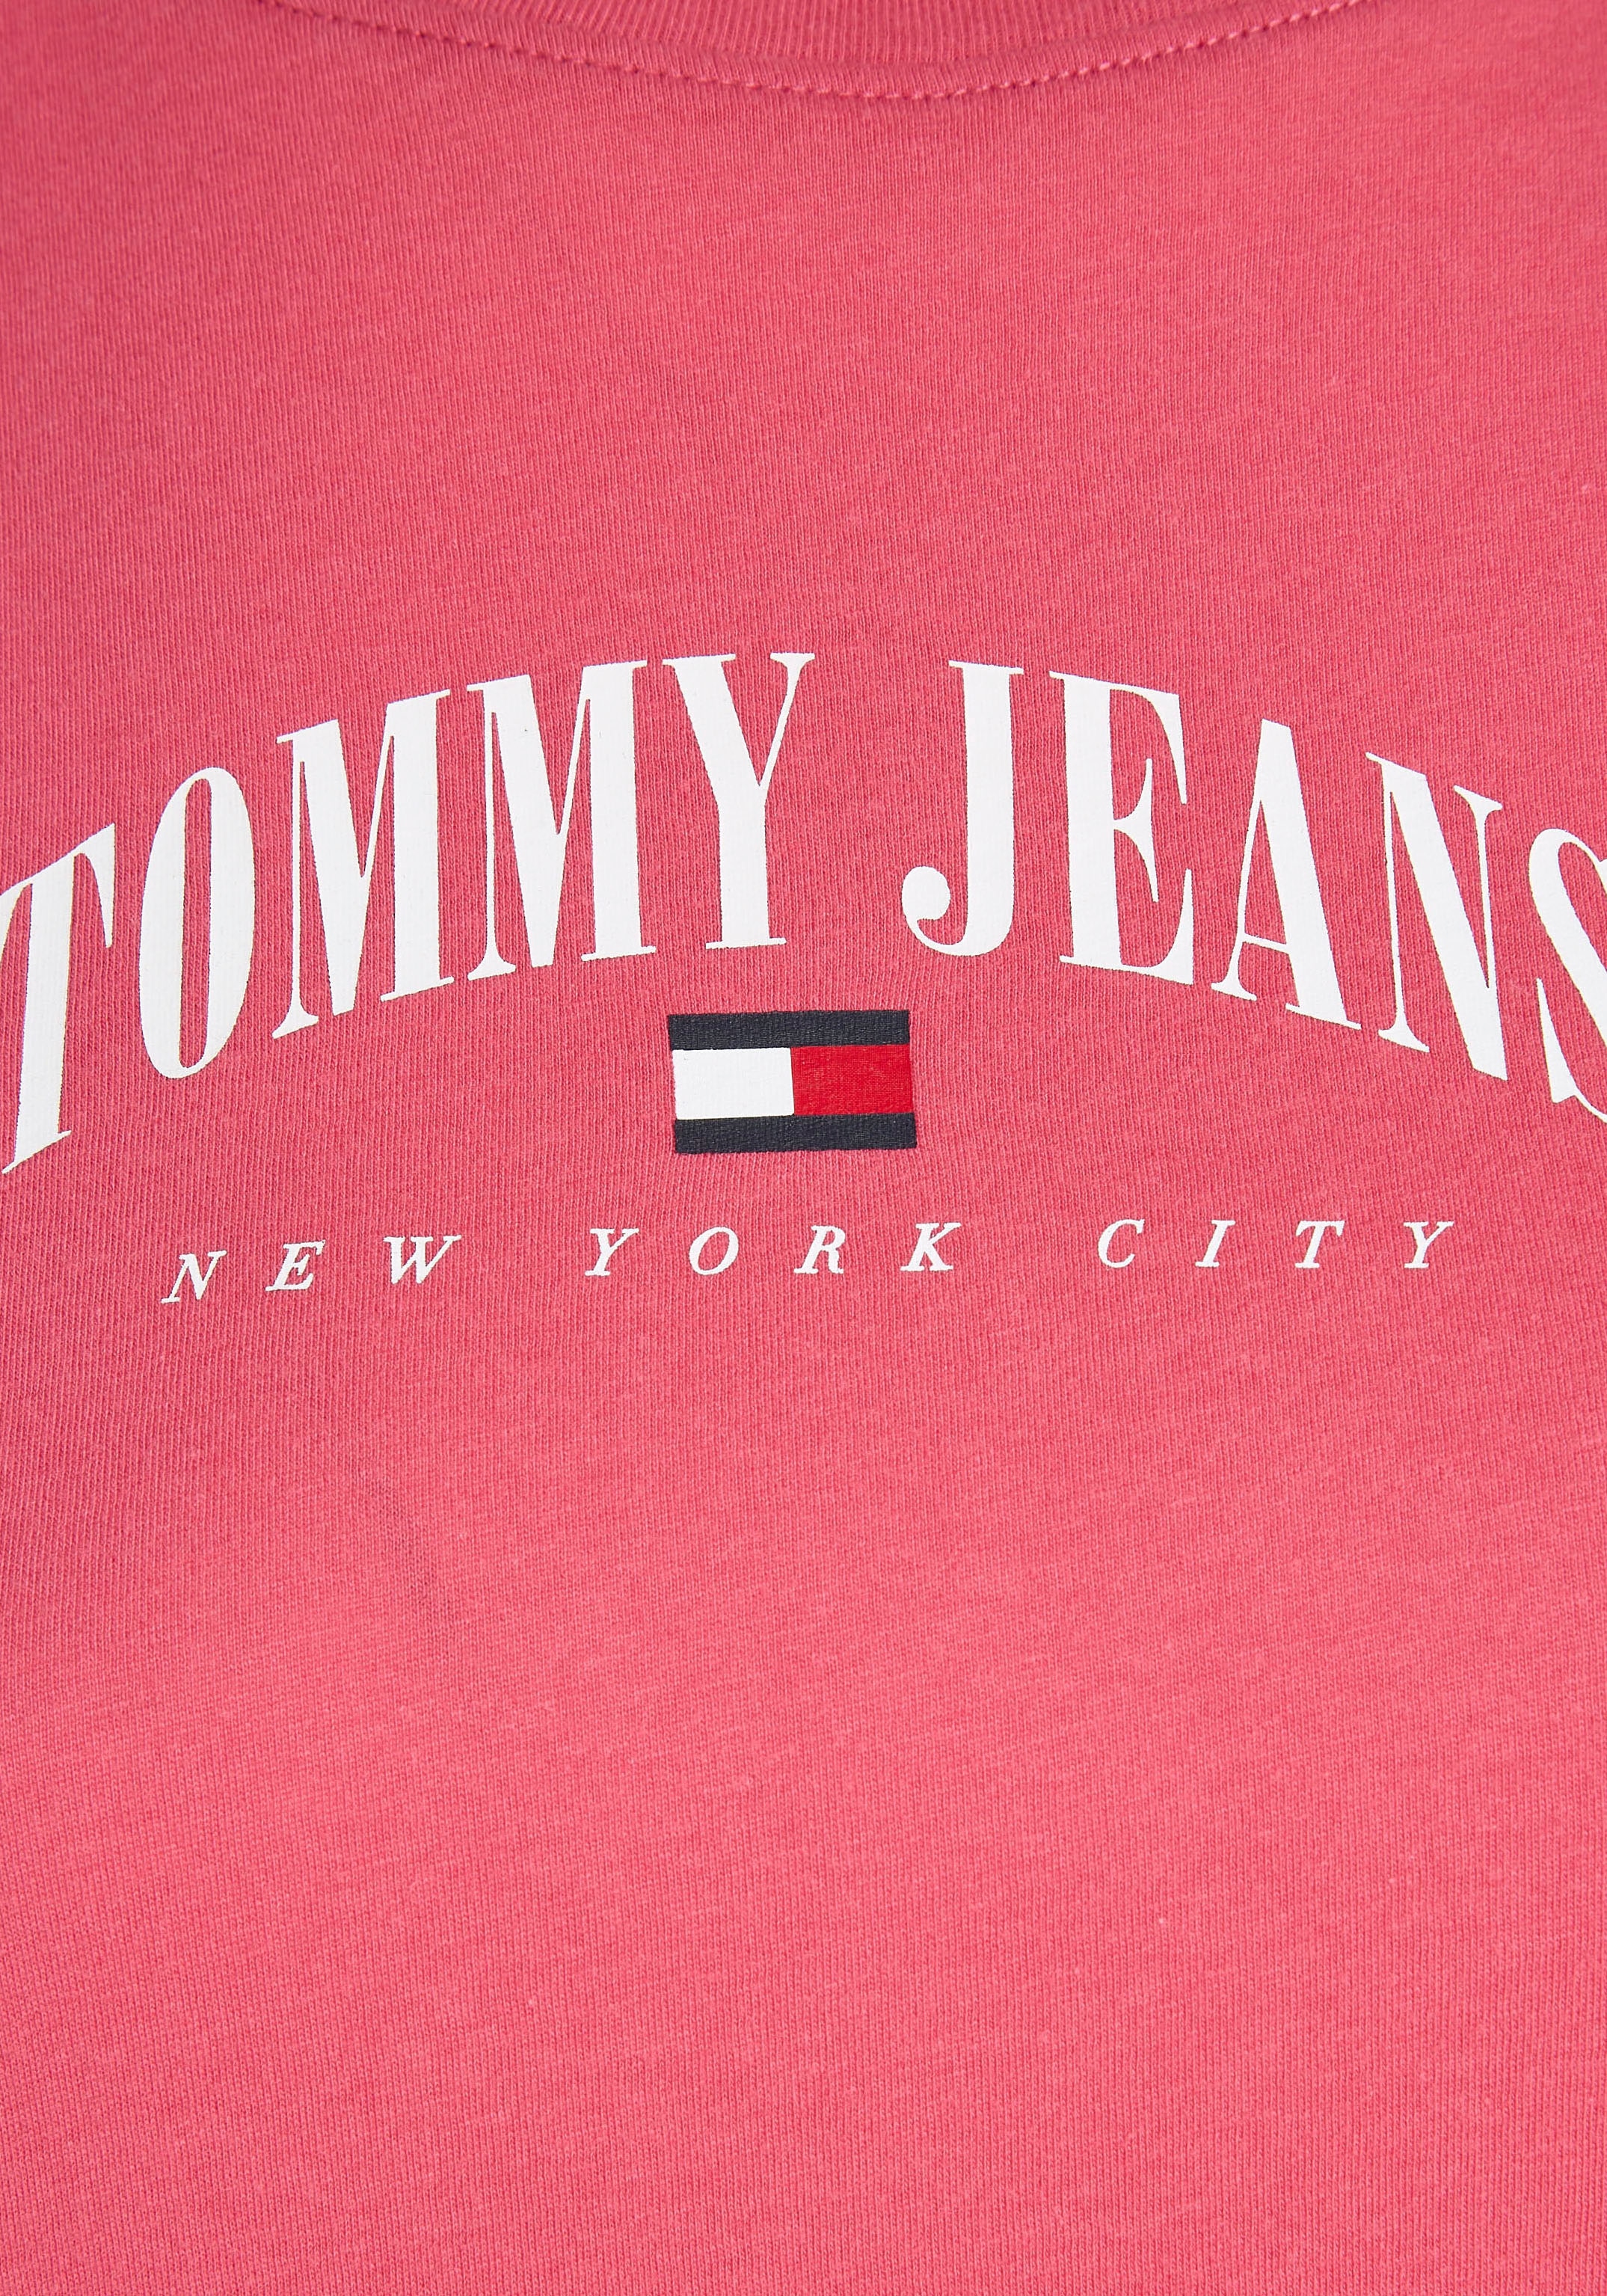 PLUS Tommy CURVE,mit 2 SIZE (1 BBY Jeans I\'m walking Tommy LOGO ESSENTIAL | »TJW Curve CRV Kurzarmshirt bestellen Jeans-Markendetails SS«, tlg.),